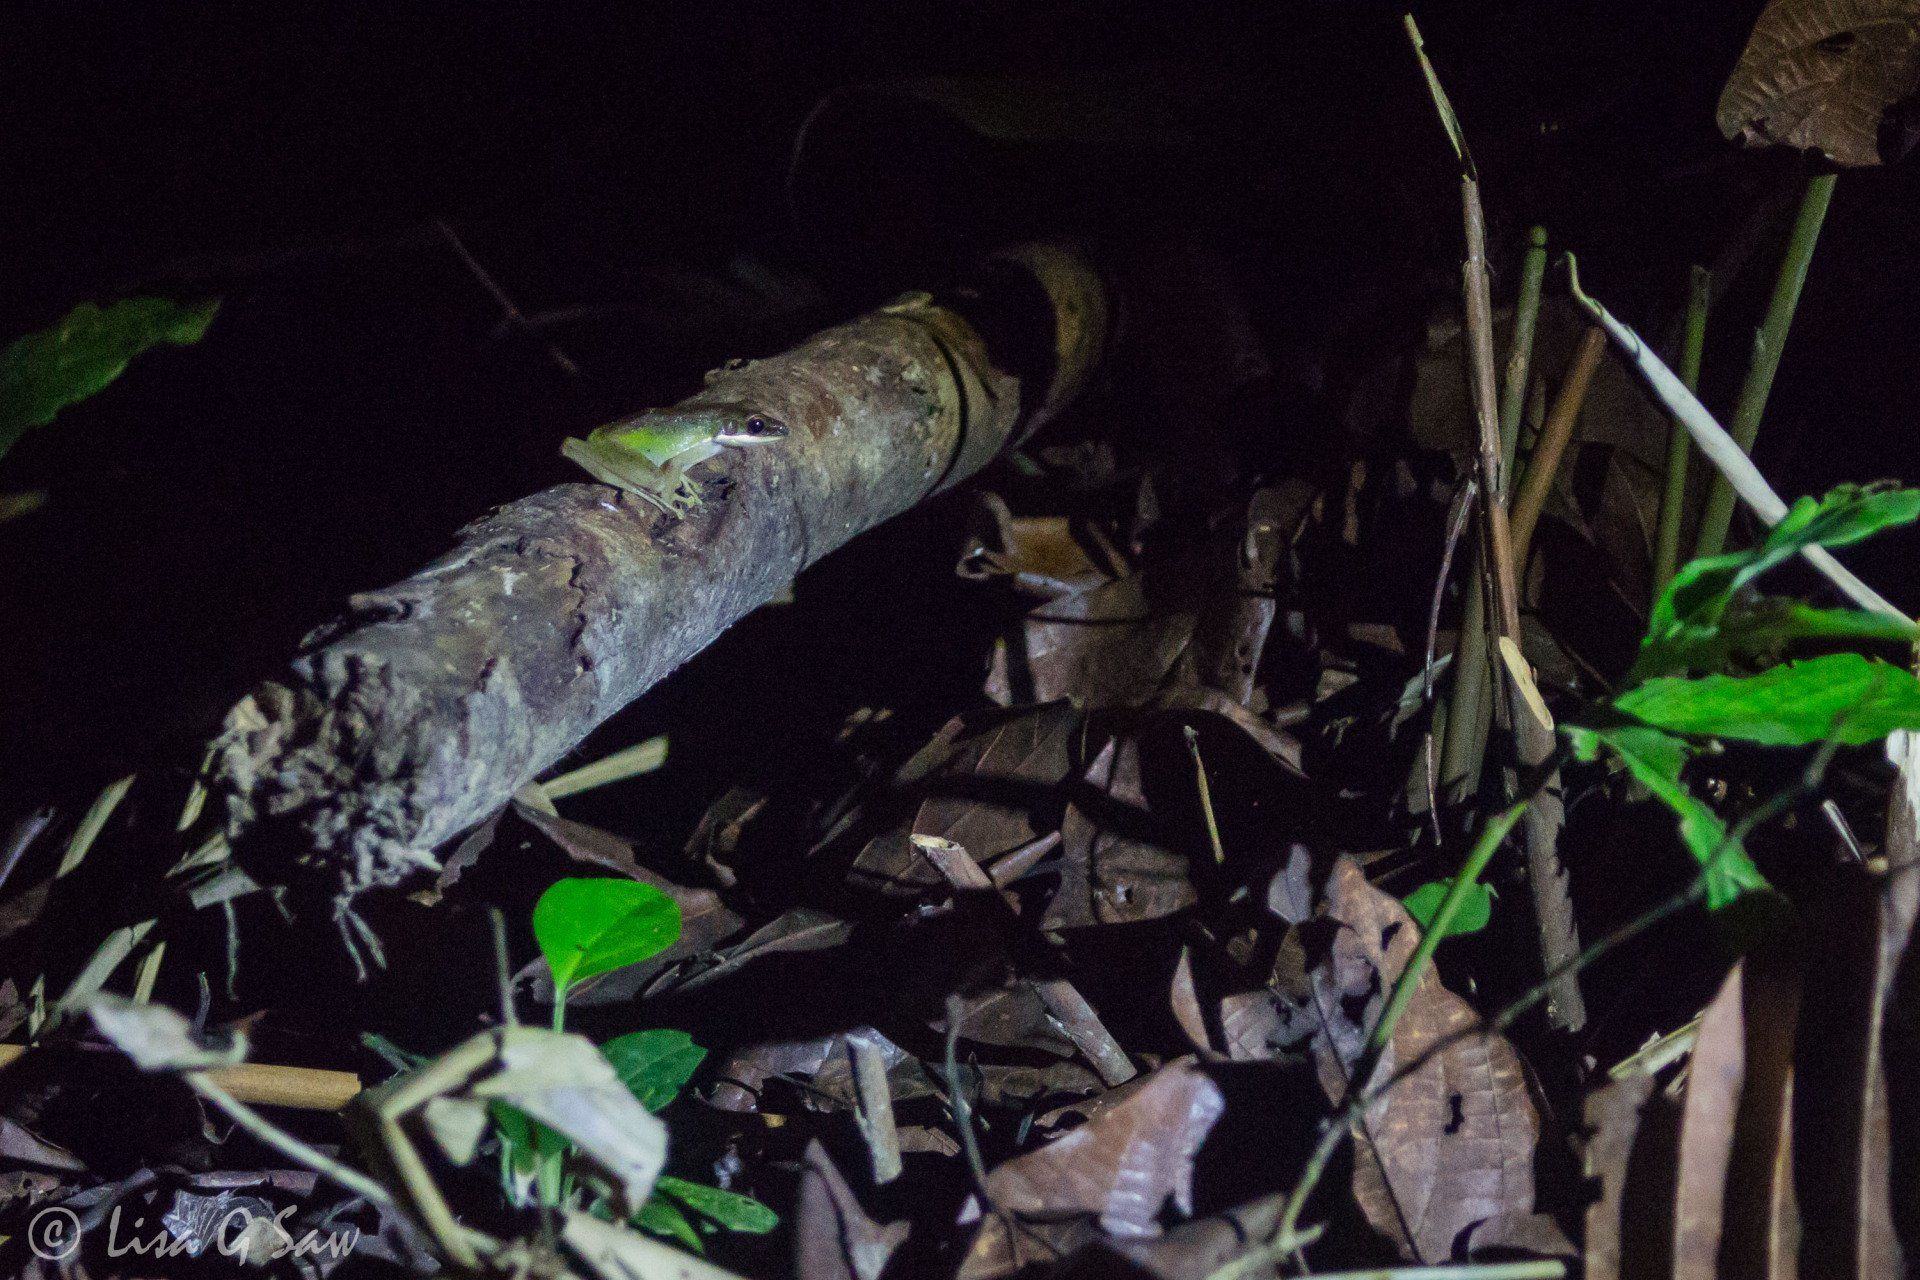 Frog on log on a night safari in Gunung Mulu National Park